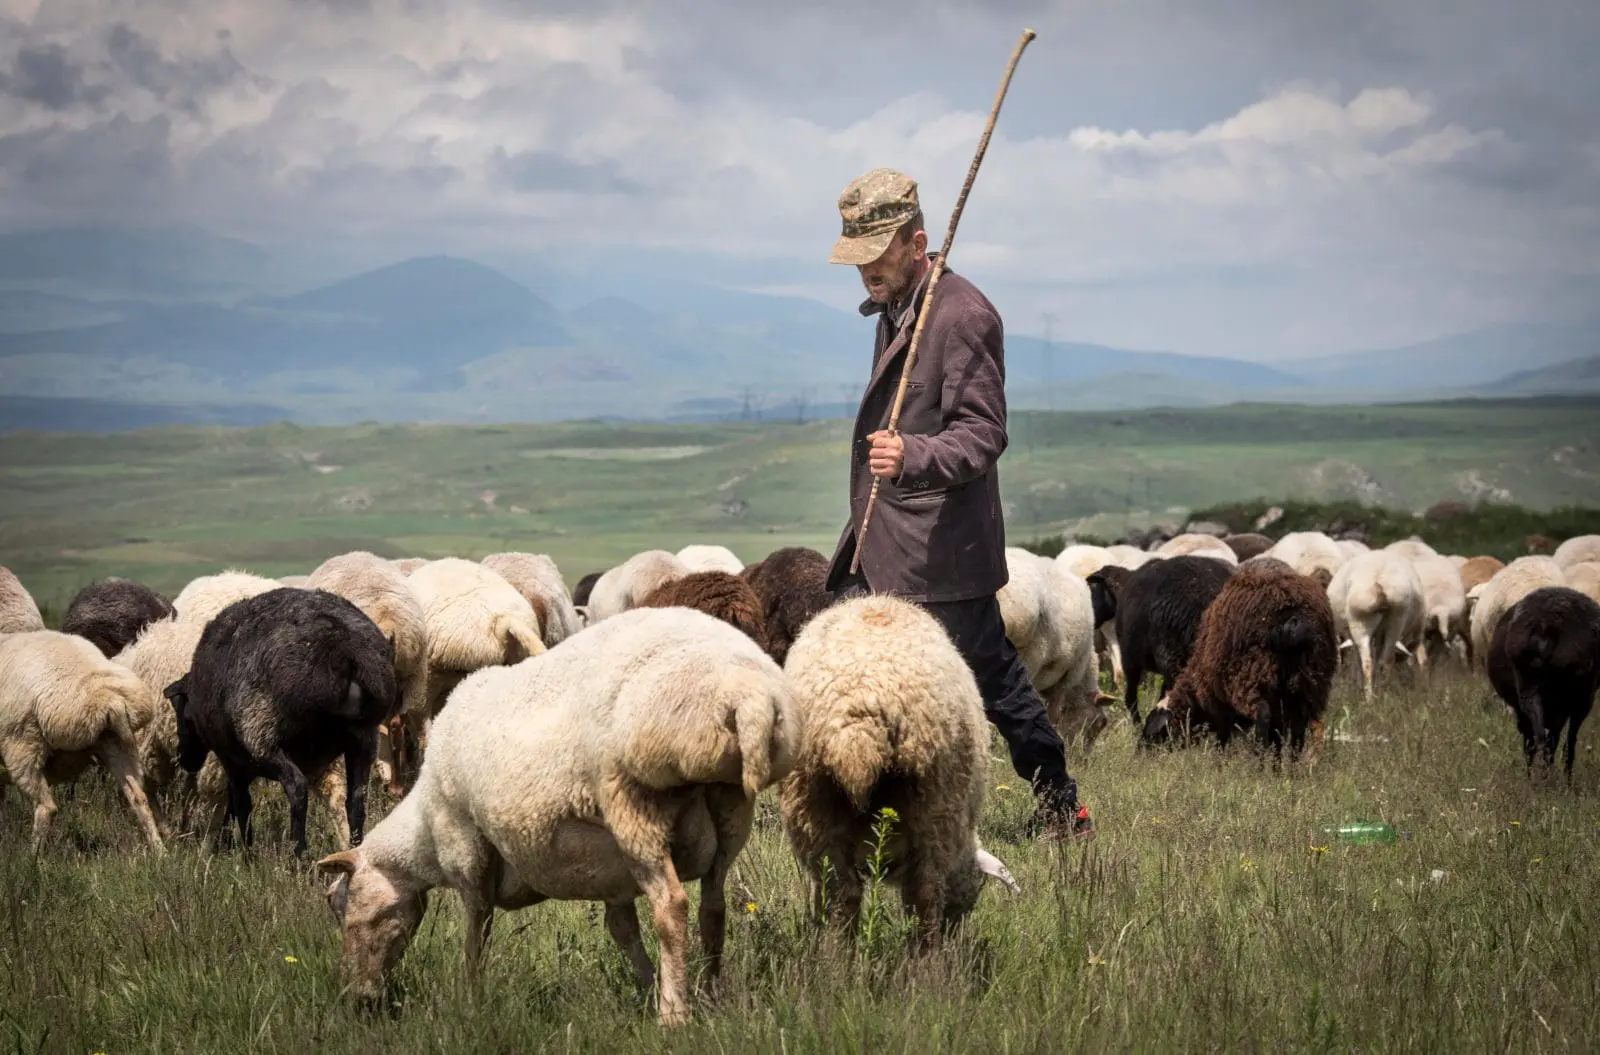 Areni, Armenia: An Armenian shepherd herding sheep in the countryside